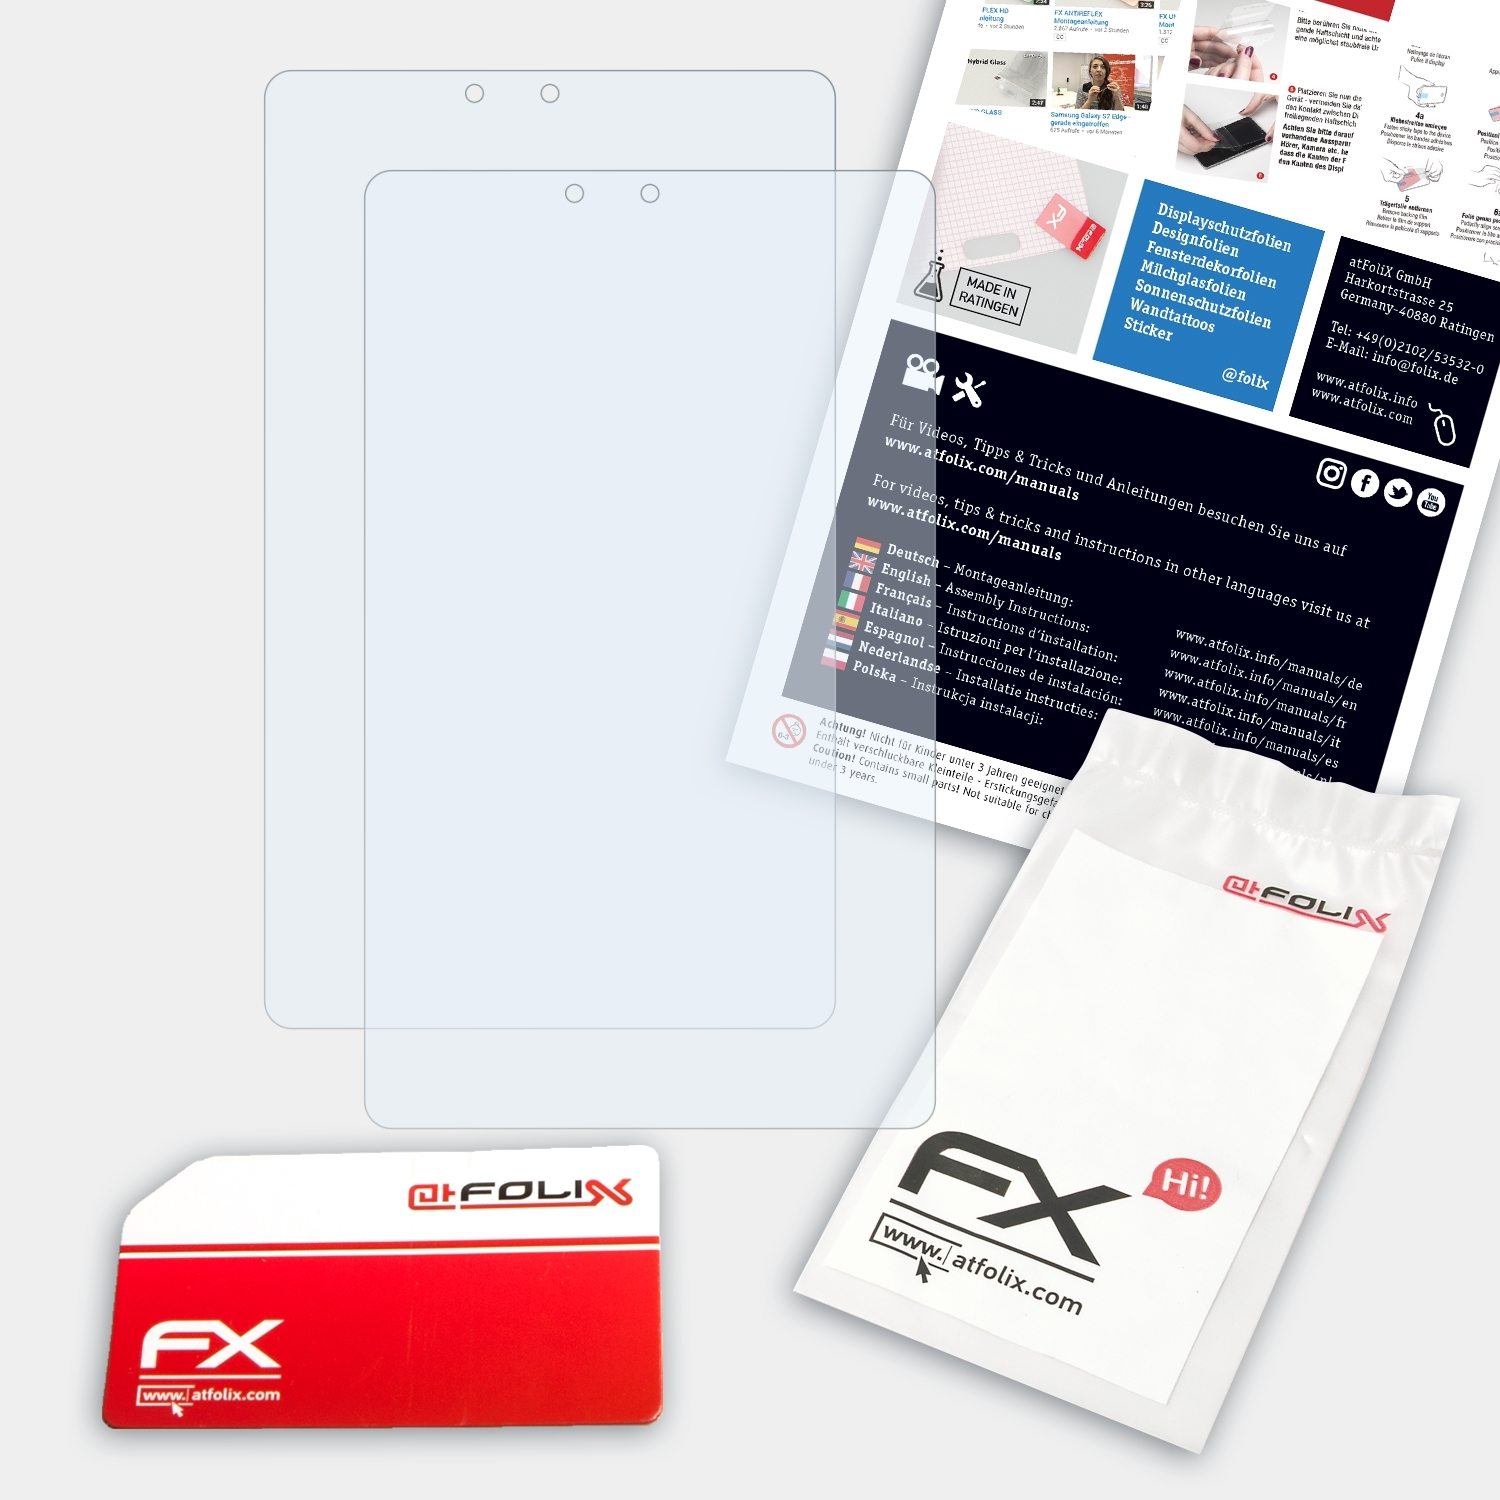 ATFOLIX 2x FX-Clear Displayschutz(für 8.4) Huawei M6 MediaPad Turbo